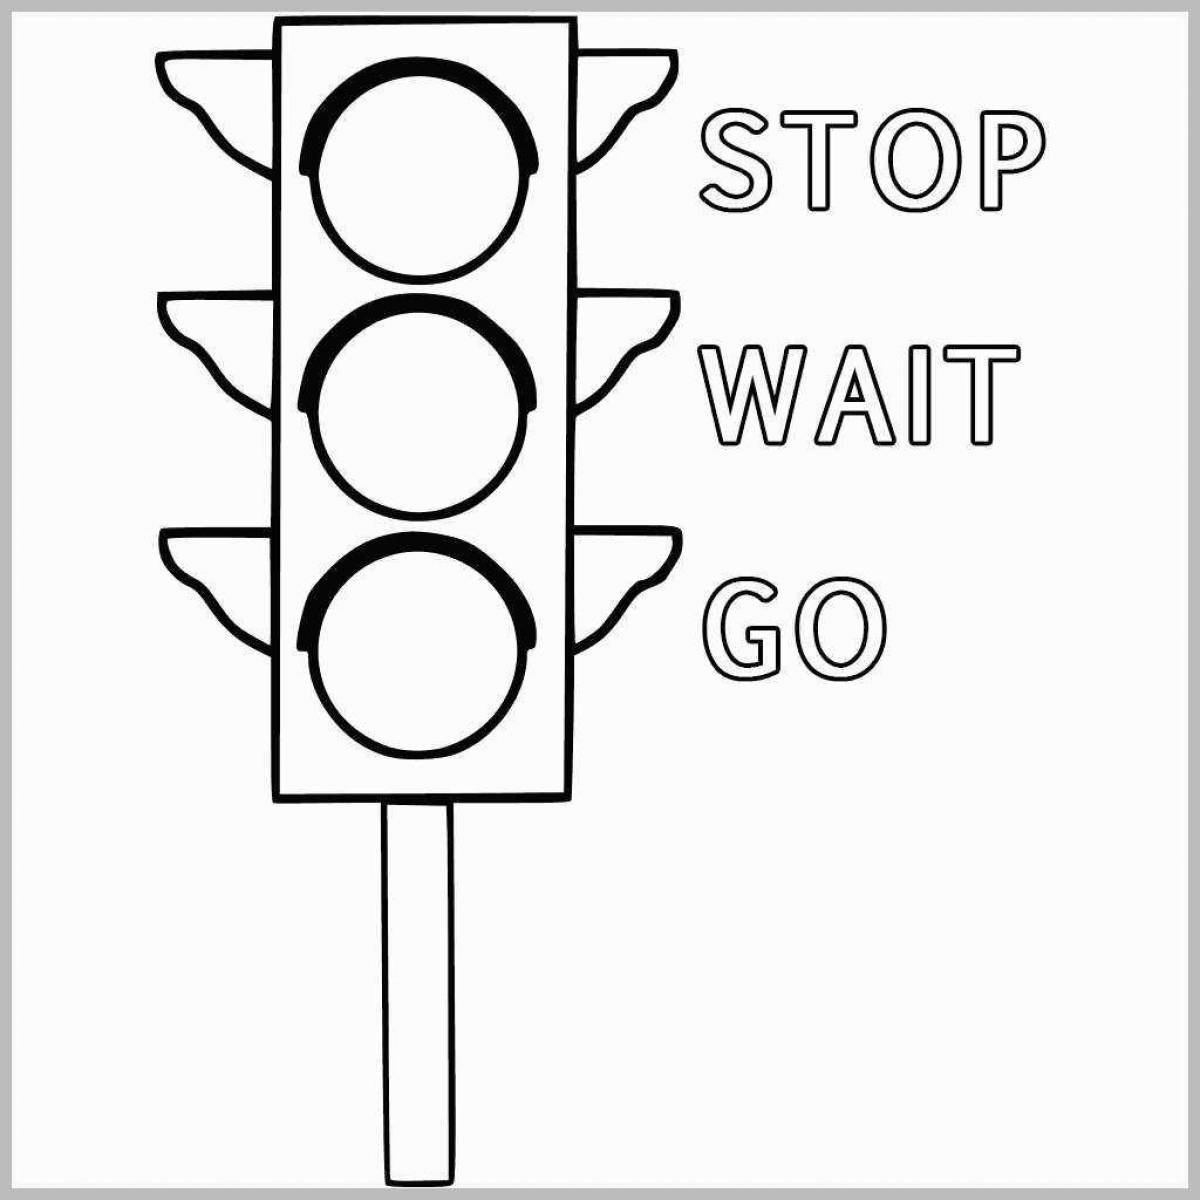 Magic traffic light with siren